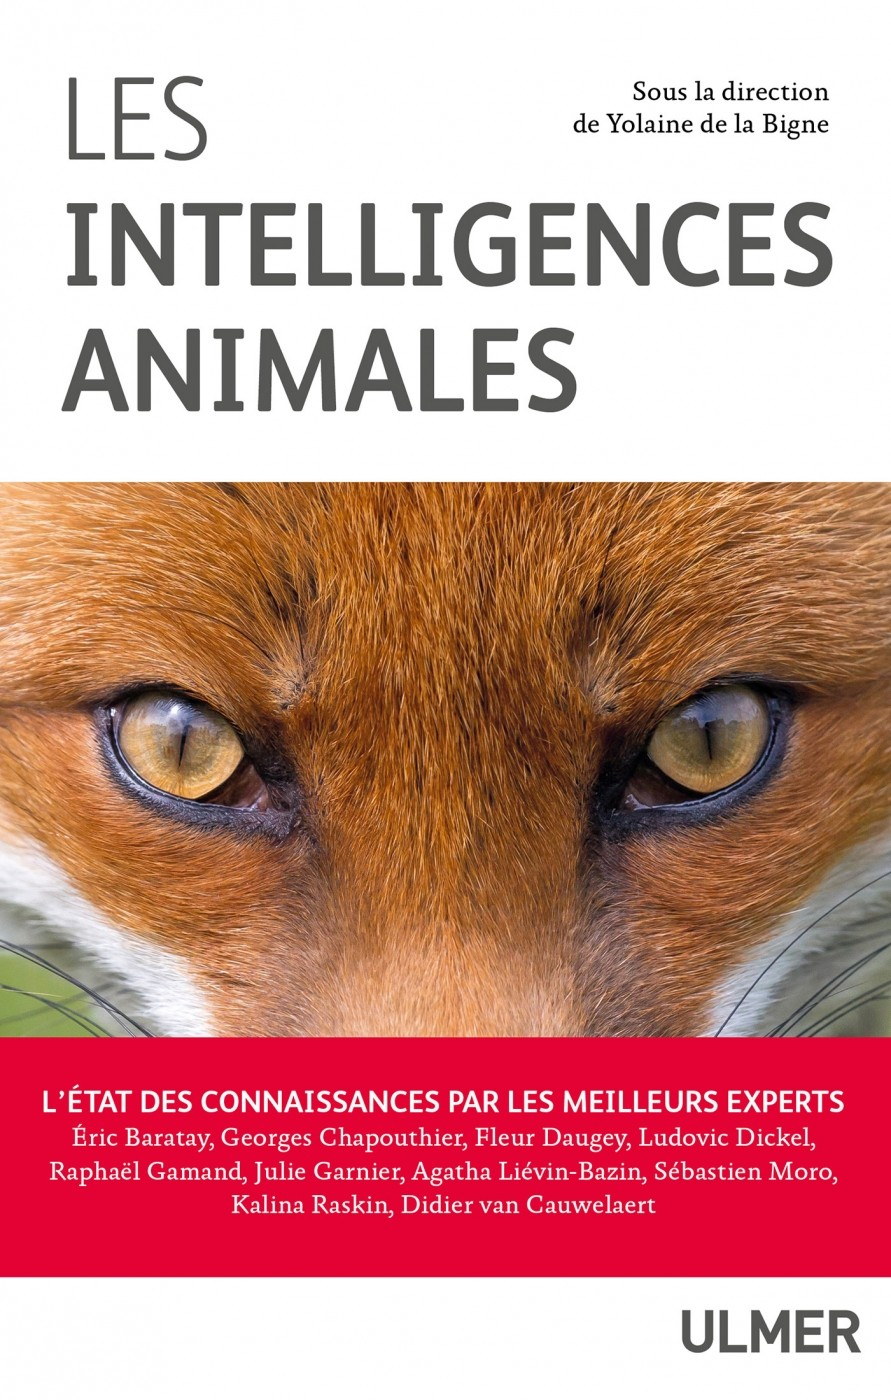 Les intelligences animales 2019